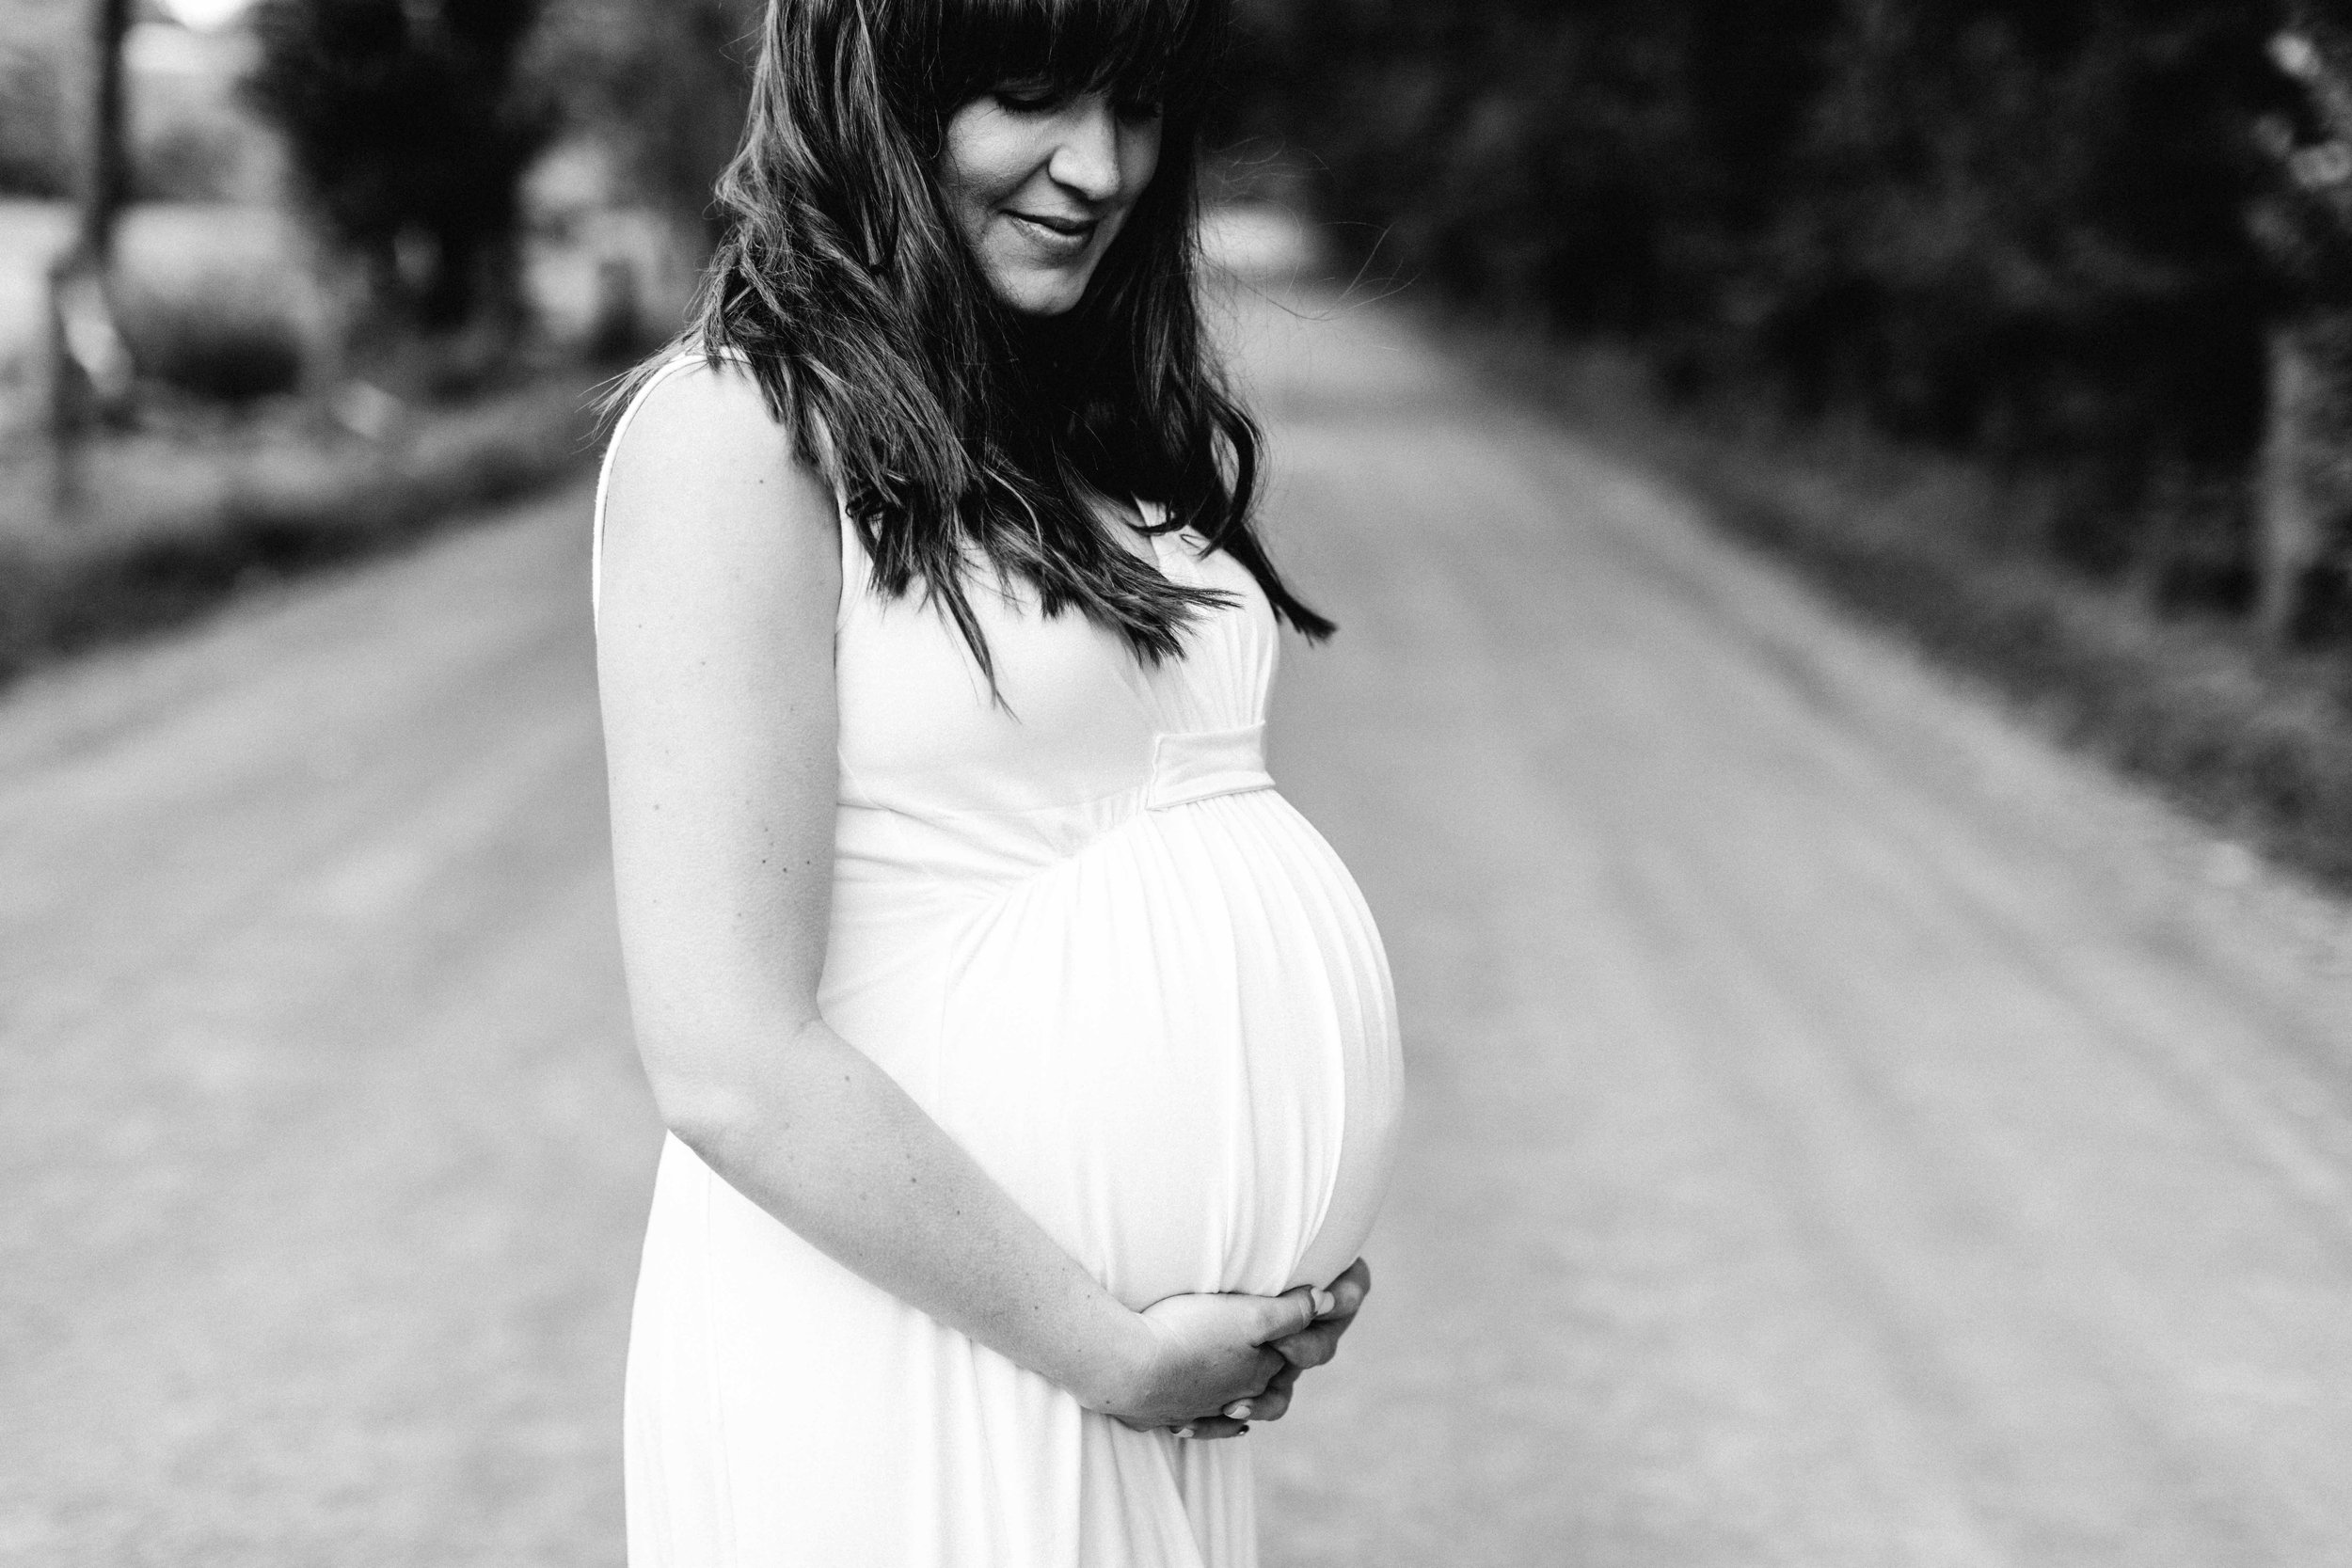 brownlow-hill-camden-maternity-photography-shoot-bonnie-bush-www.emilyobrienphotography.net-46.jpg